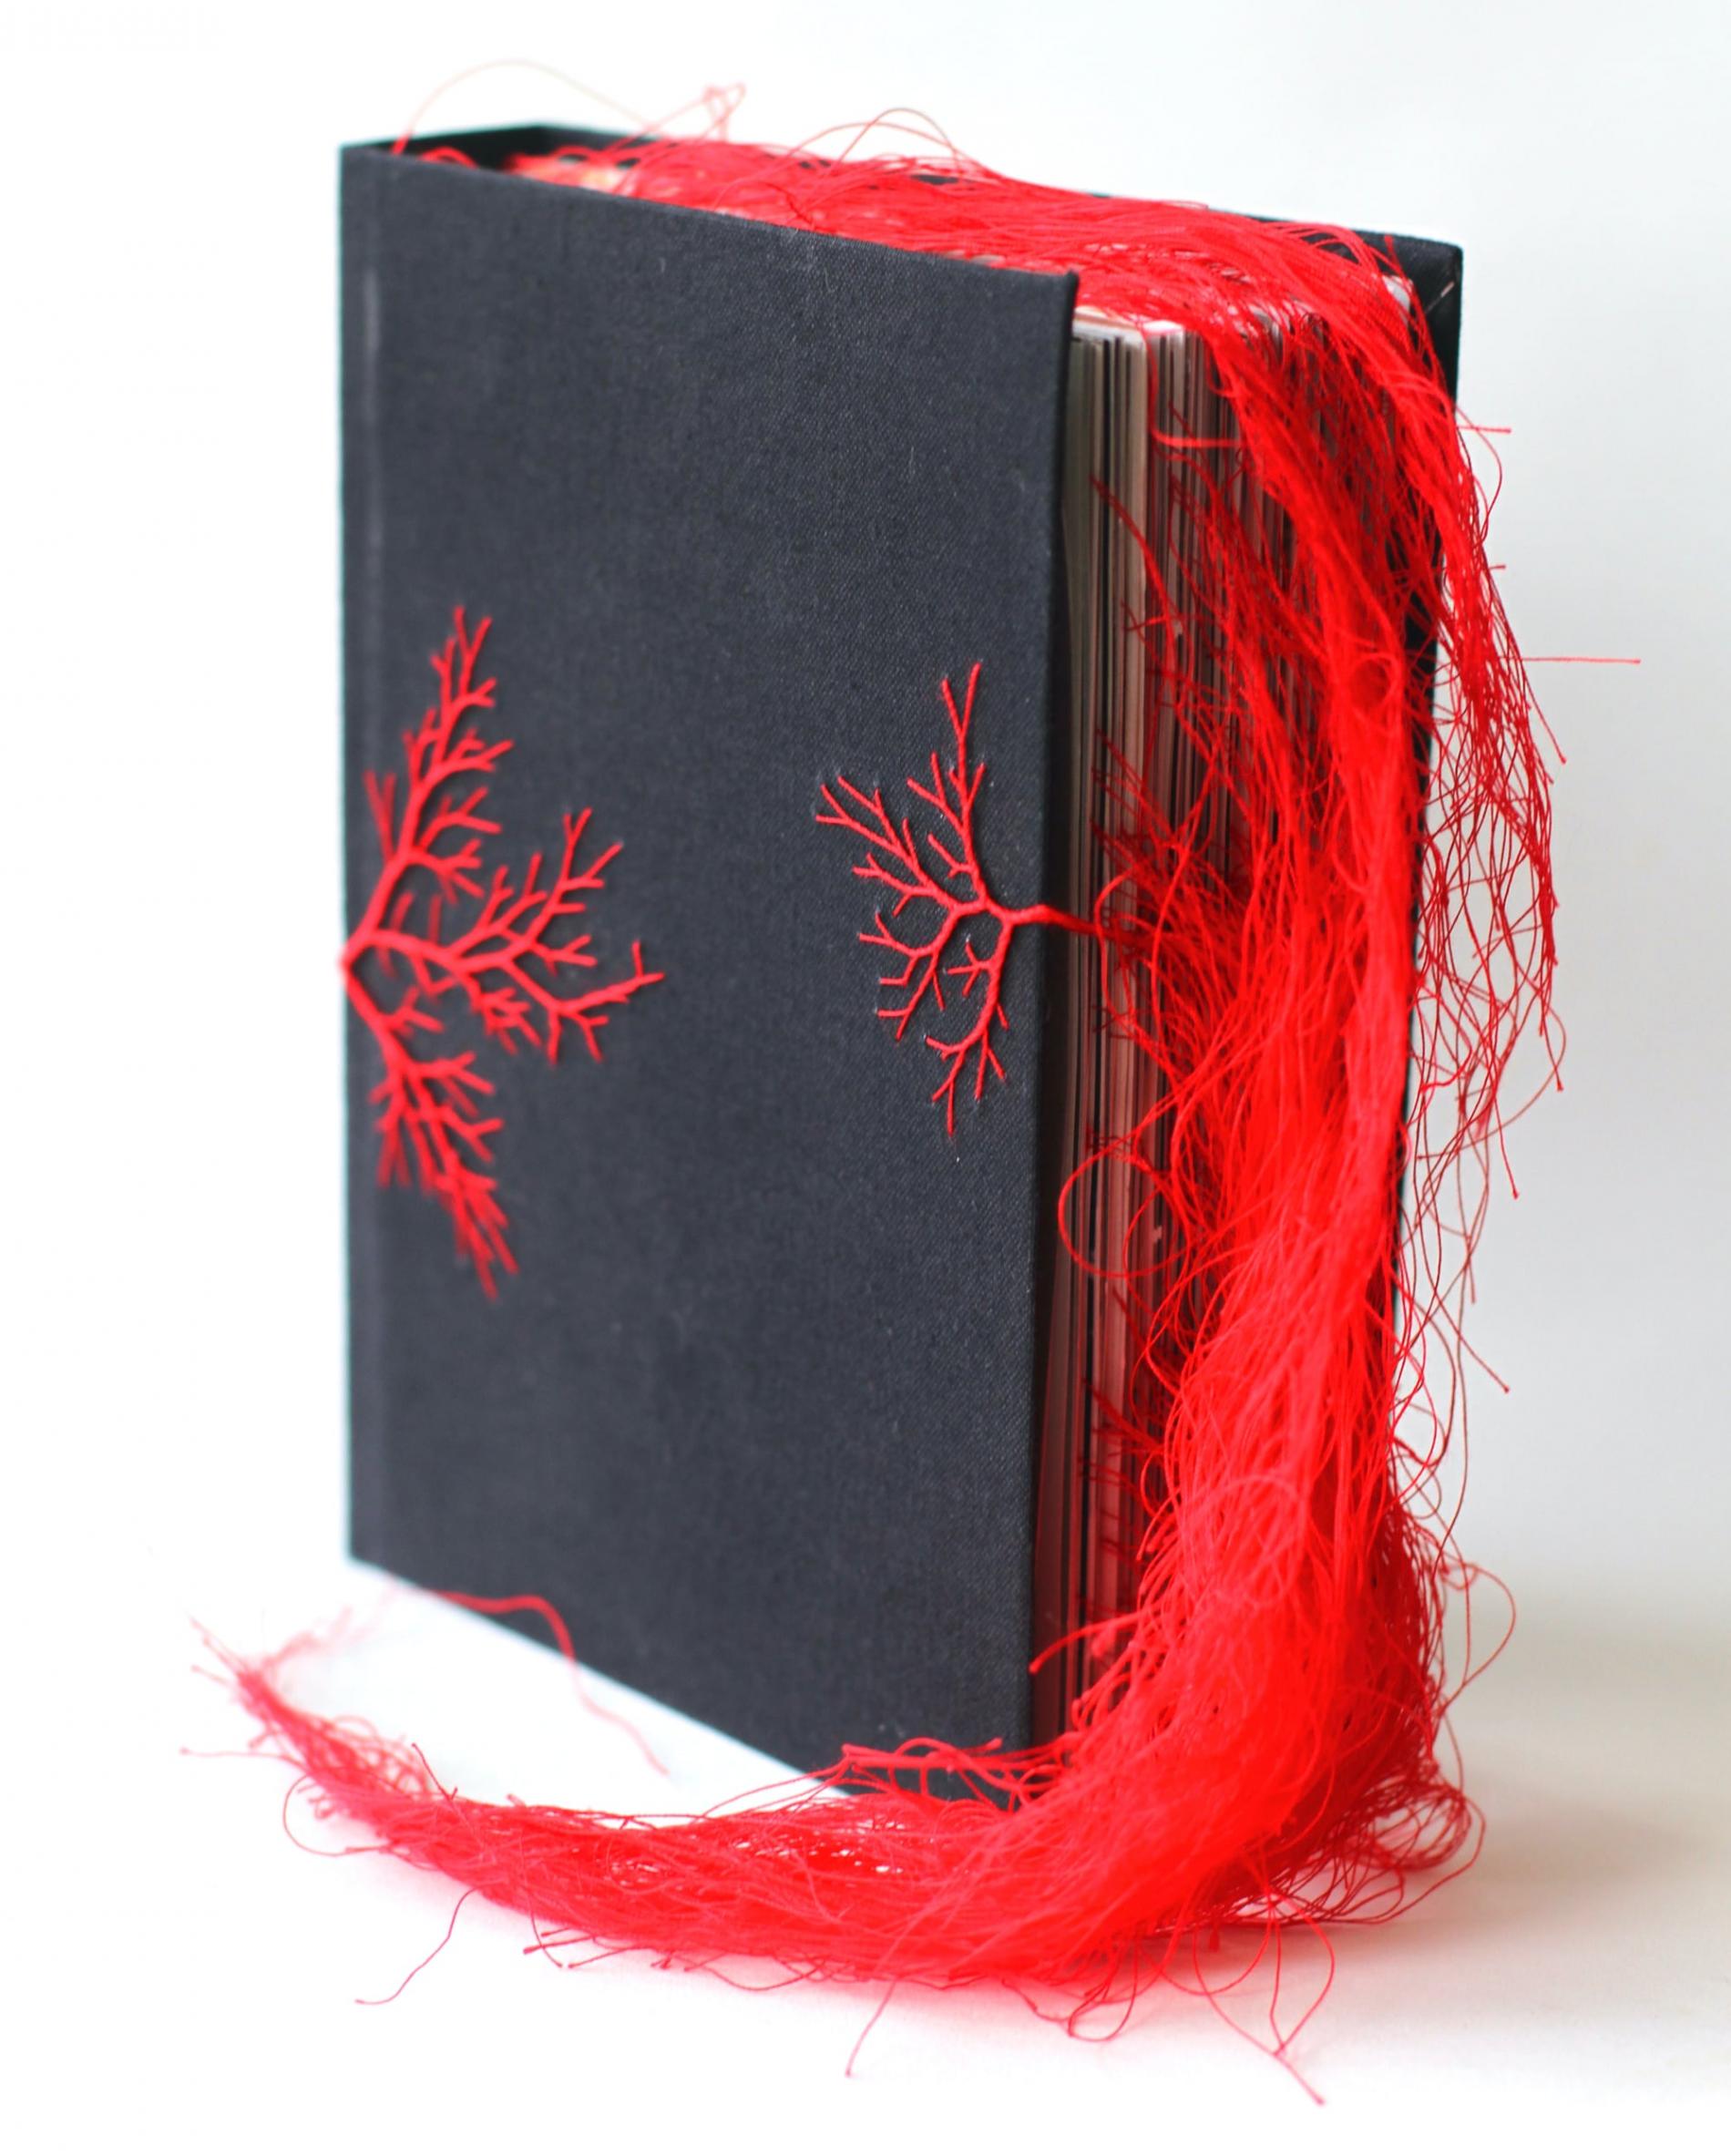 obra textil con hilo rojo que abrazado un libro rima day